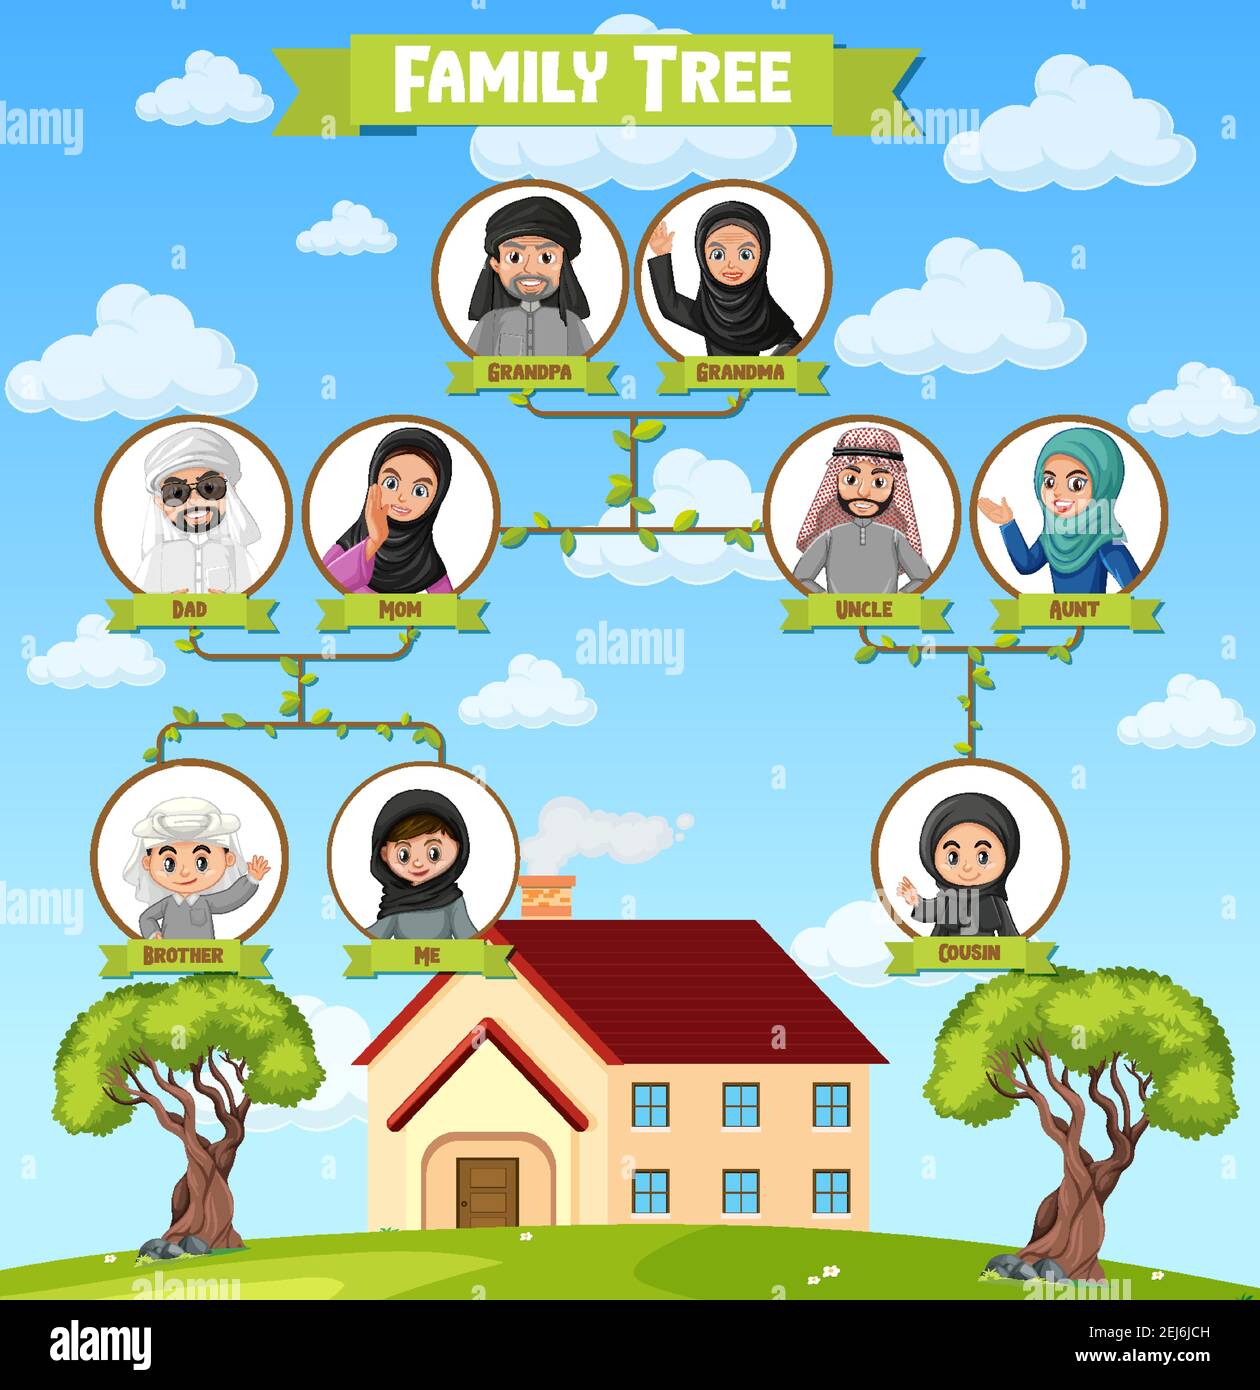 Diagram showing three generation of Arab family illustration Stock Vector